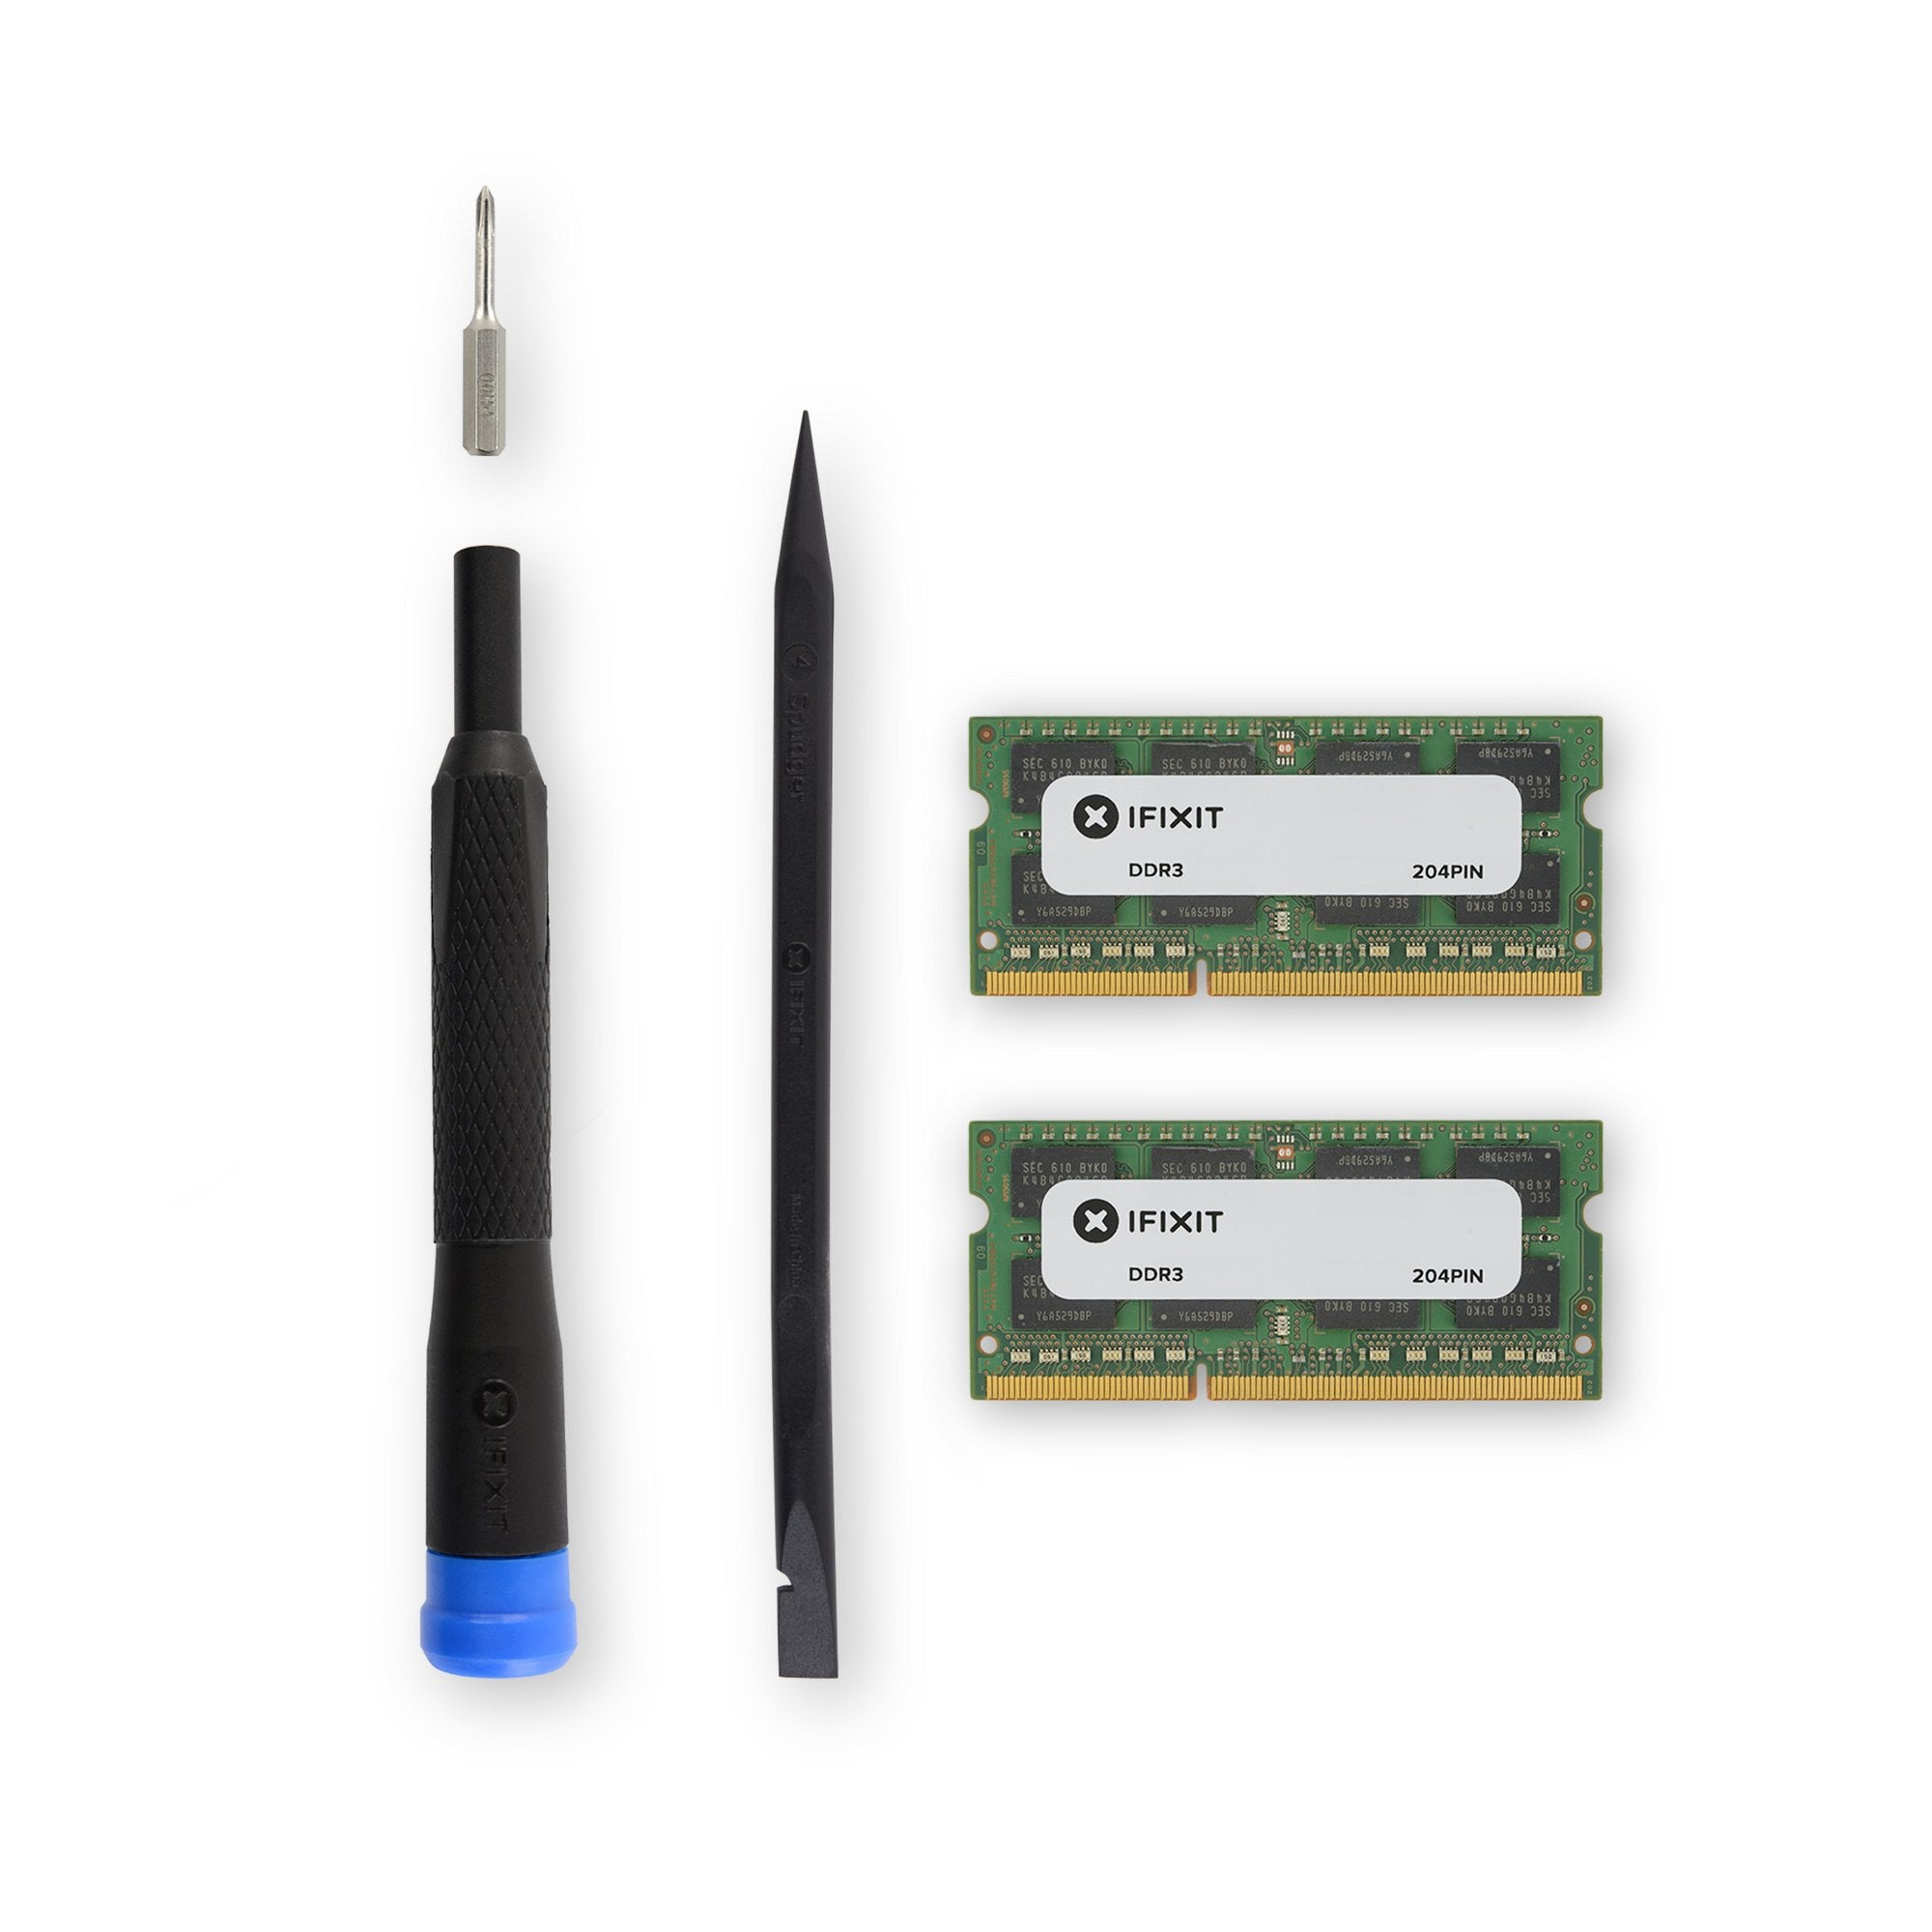 MacBook Pro 15 Unibody (Mid 2010) Memory Maxxer RAM Upgrade Kit